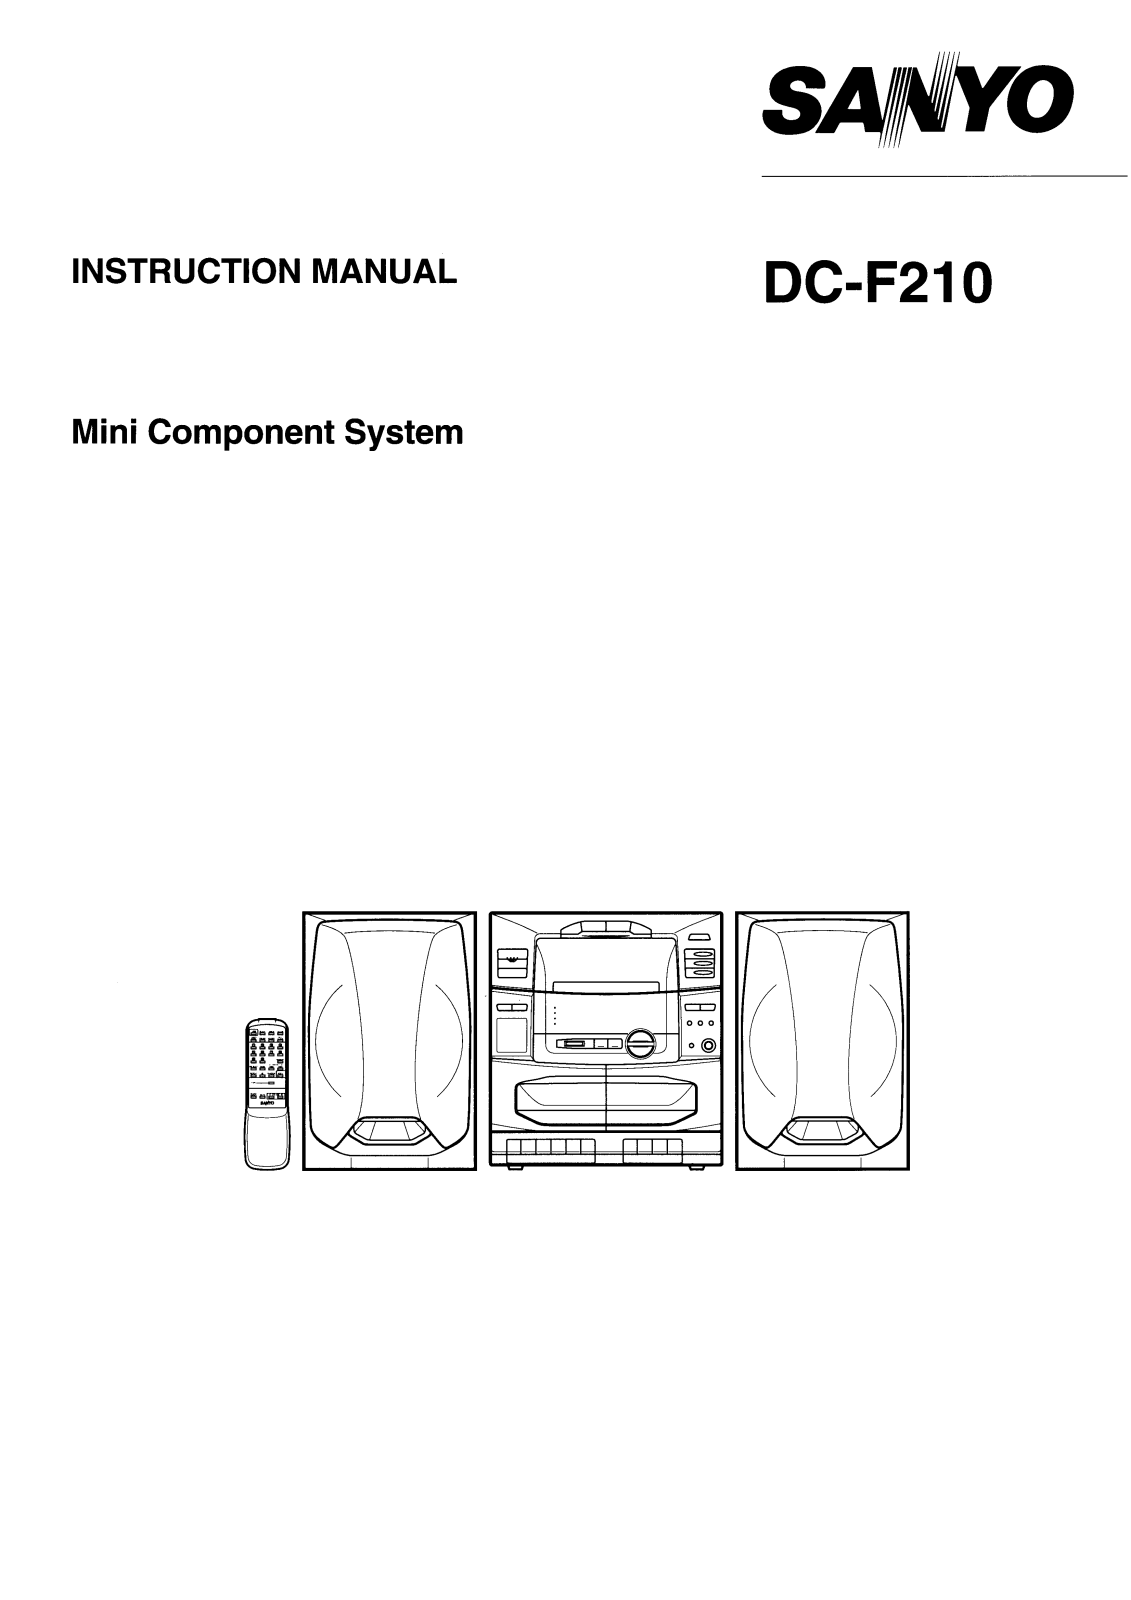 Sanyo DC-F210 Instruction Manual